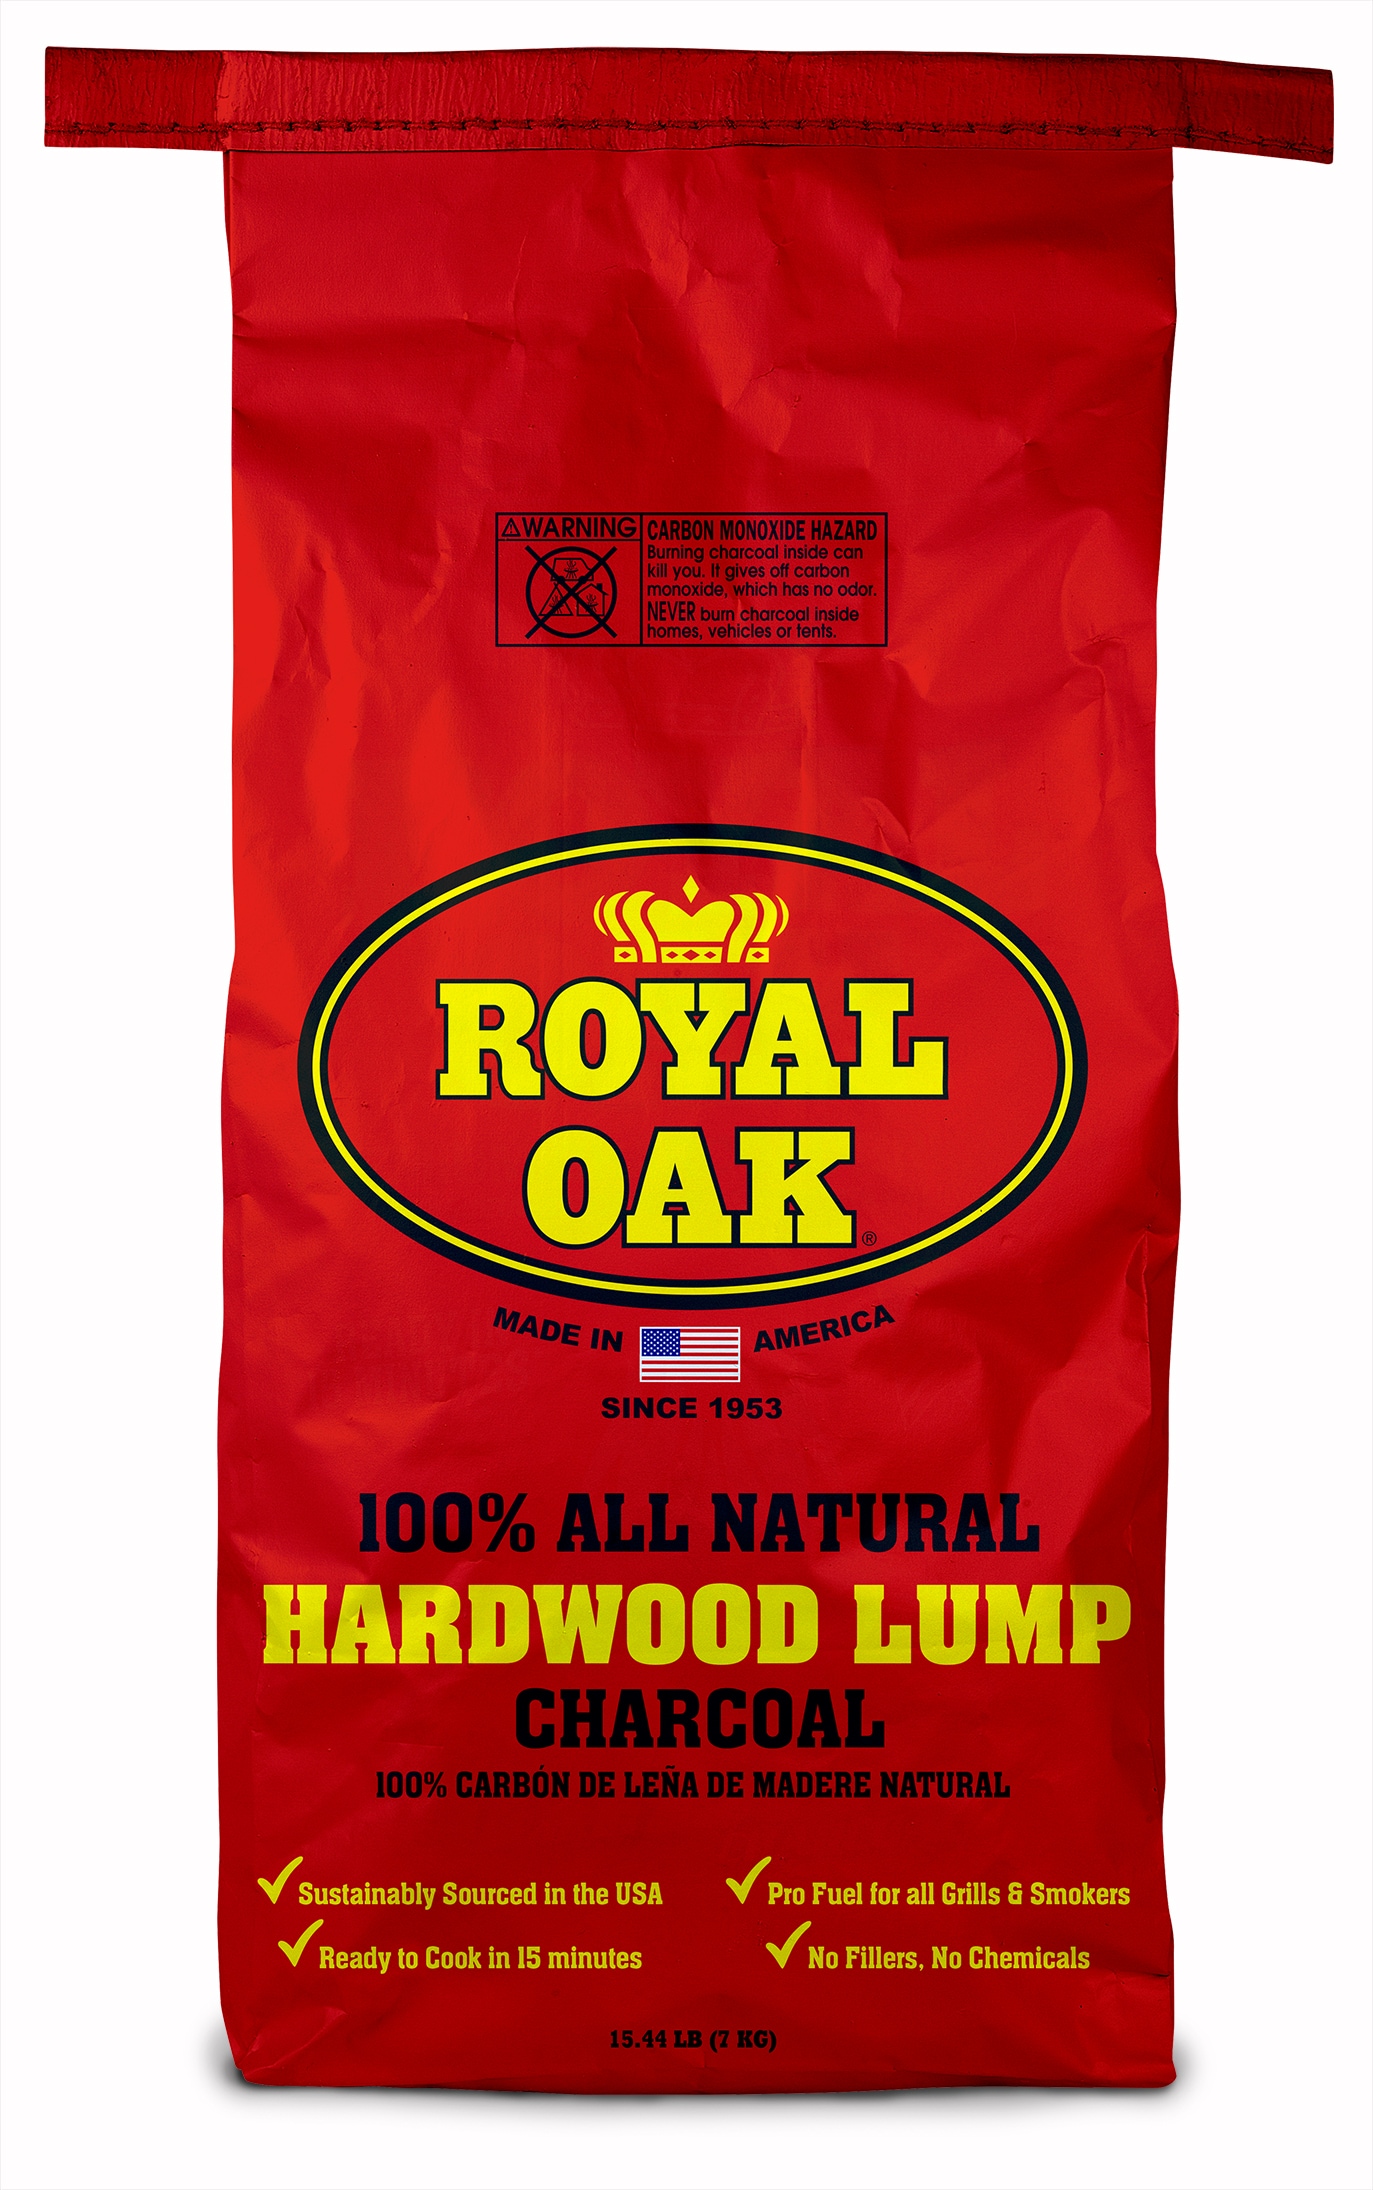 Royal Oak Classic 15.44LB Lump Charcoal 100 All Natural Hardwood